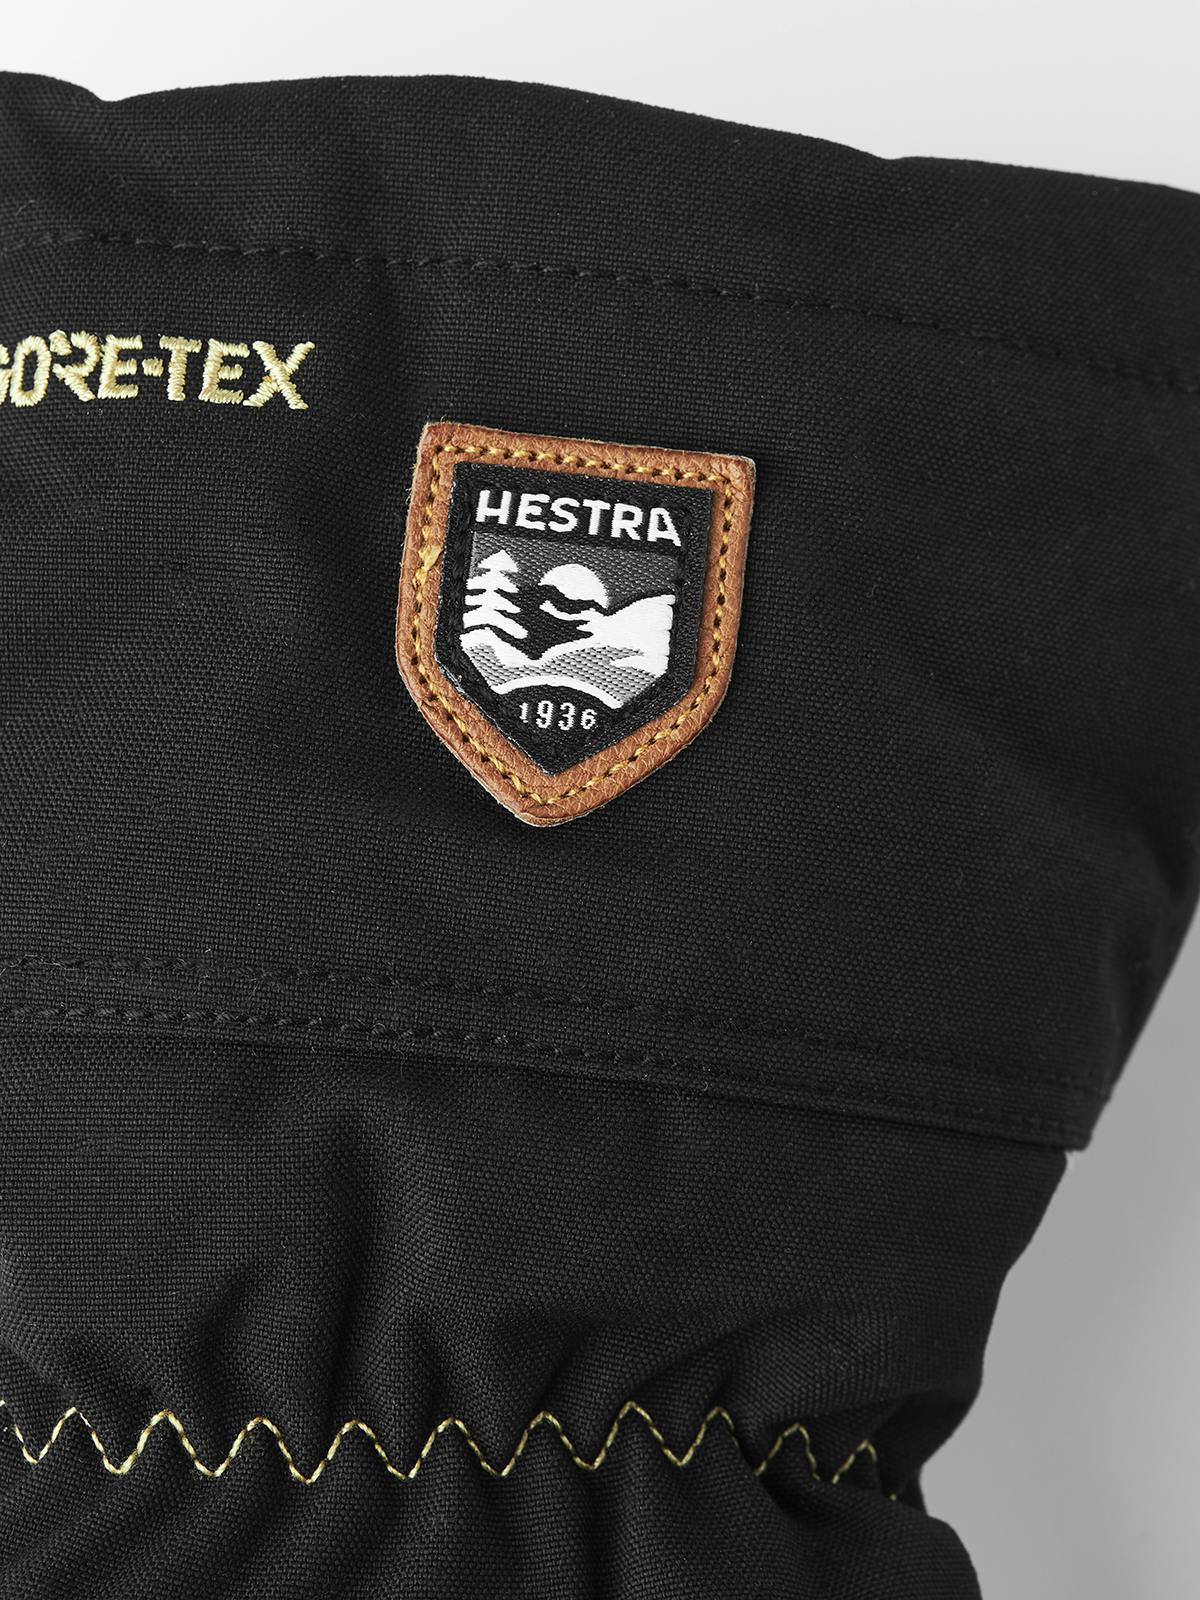 Hestra Army Leather Gore-Tex Mitt